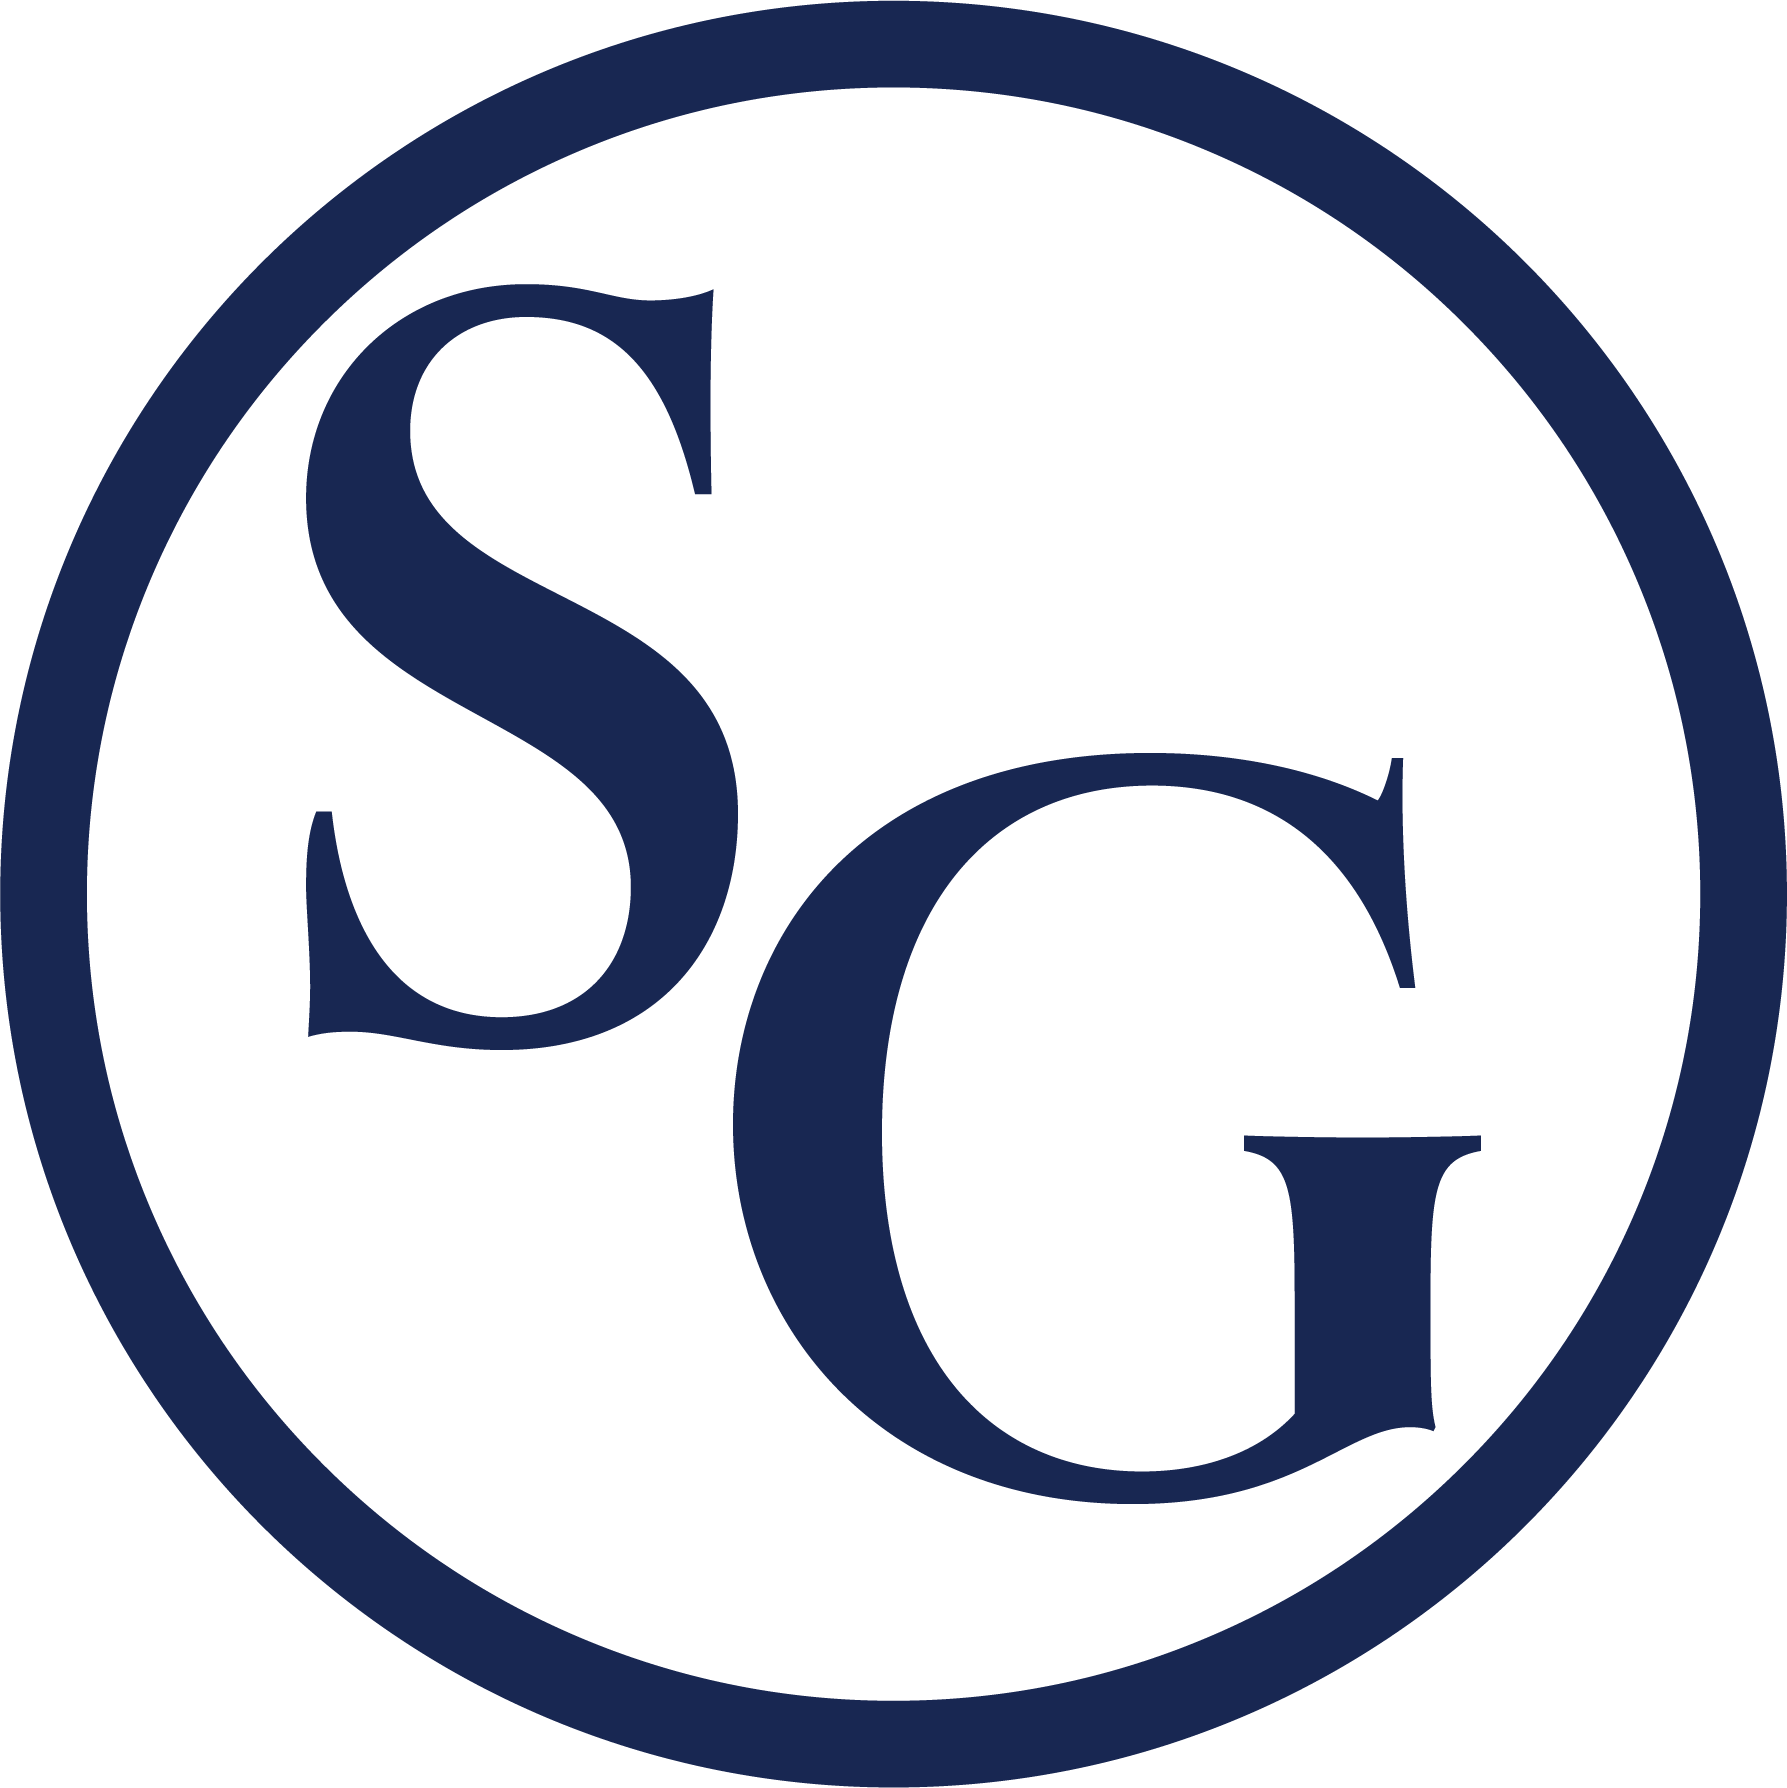 Southern Grace Builders logo